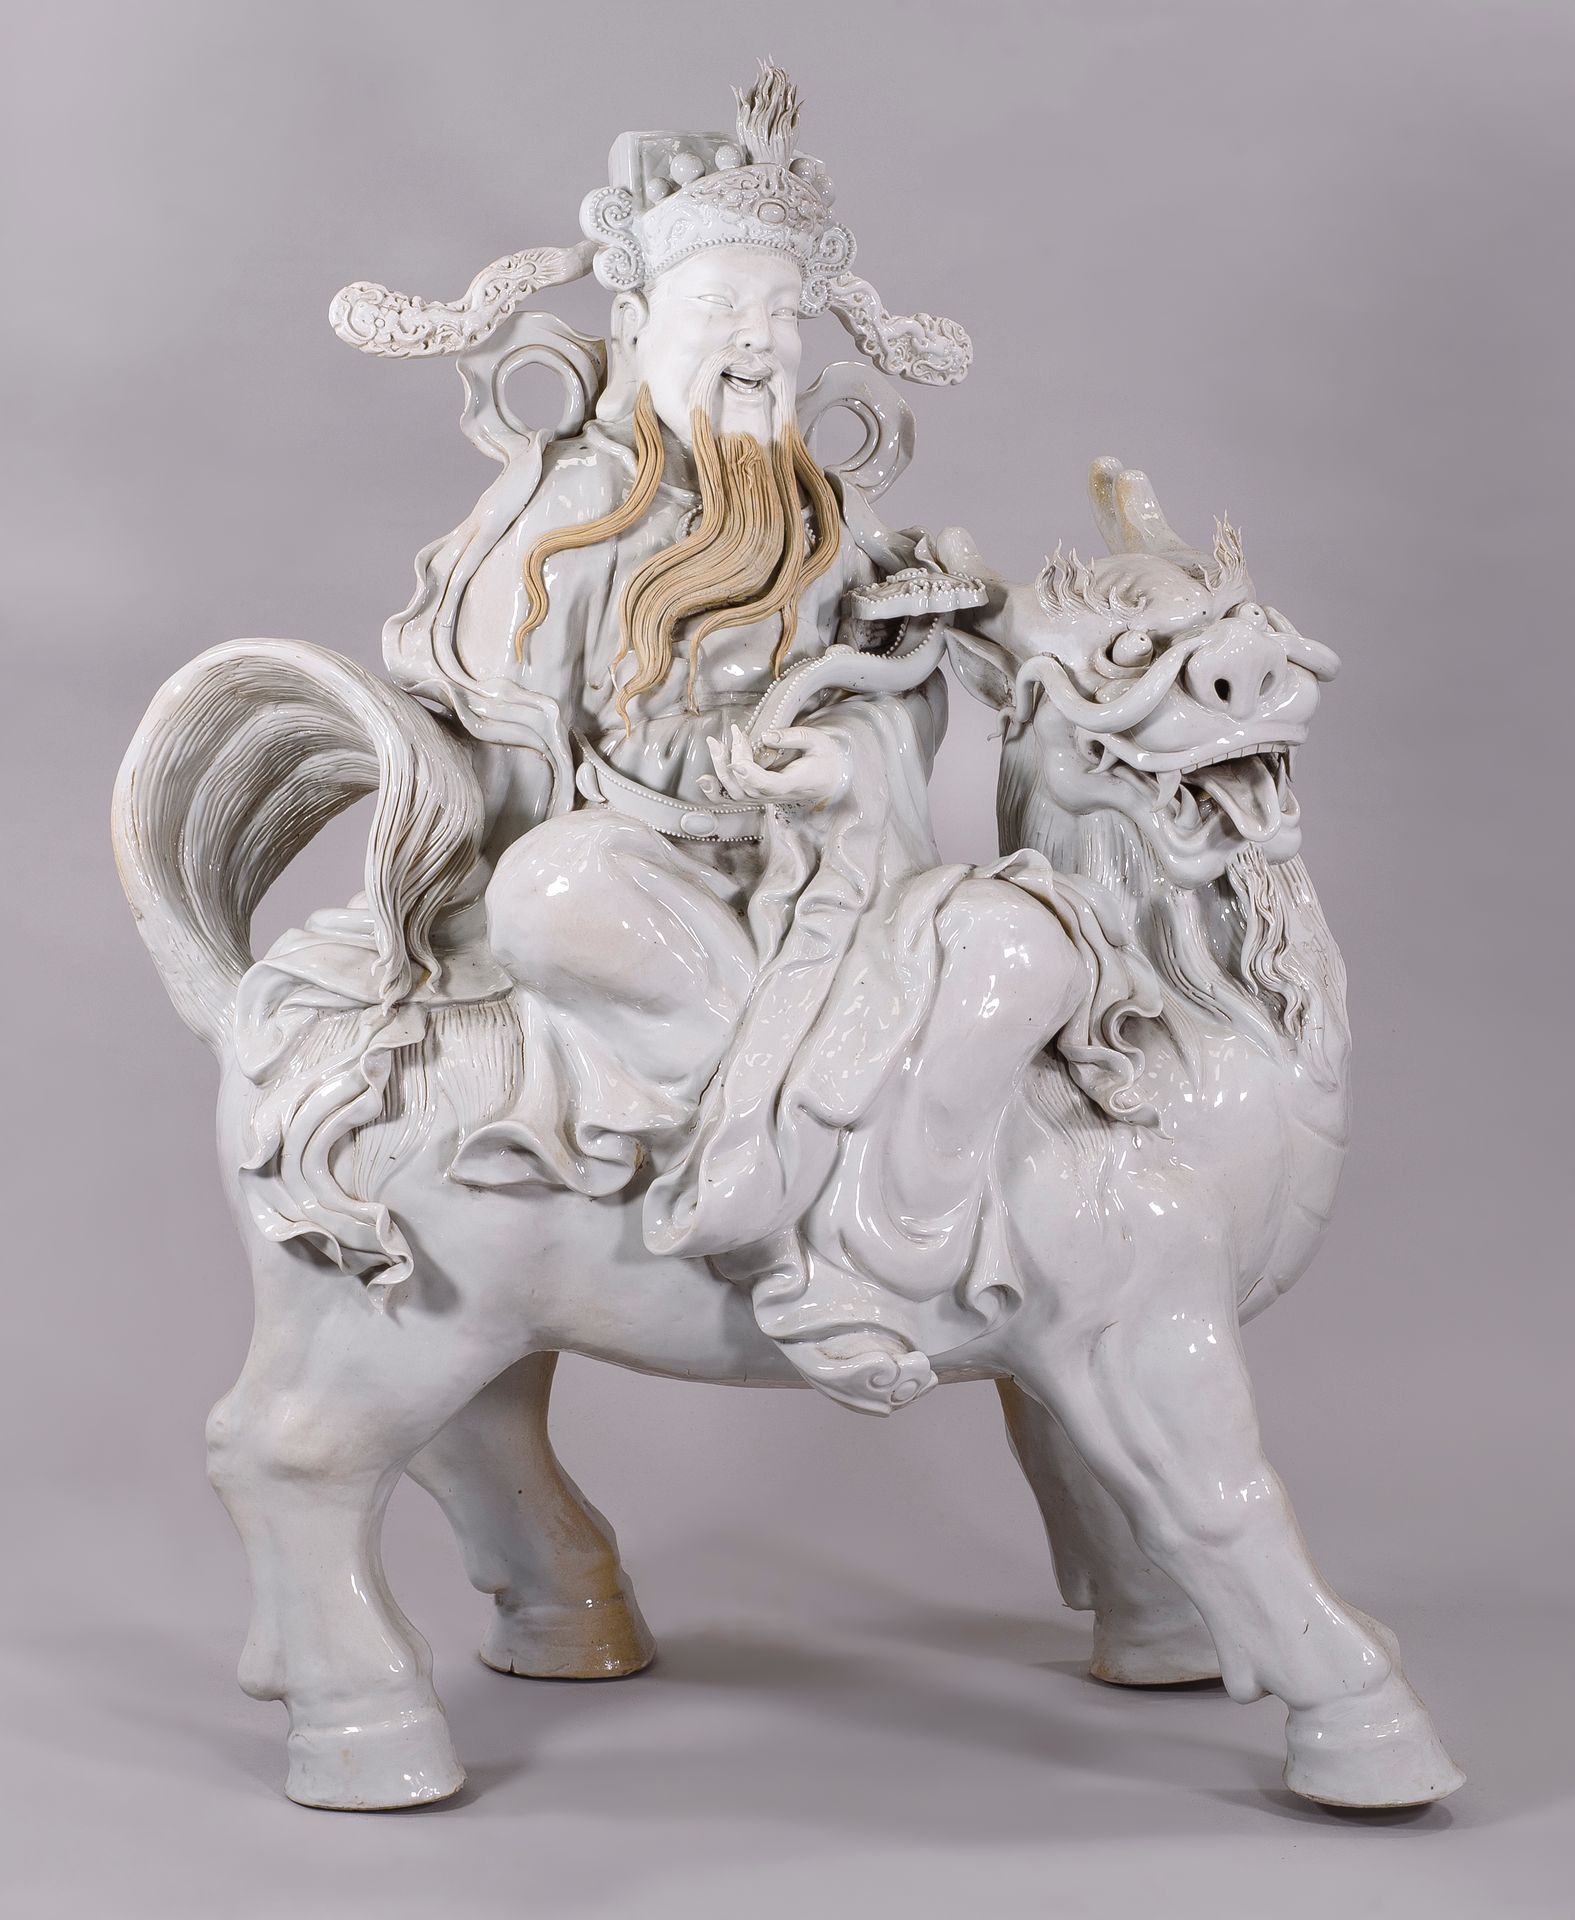 Null 中国，清朝时期

大型中国白瓷组

它表现了一个衣着华丽的圣人骑着一只狮子头和牛腿的神奇动物。

高100，宽80厘米